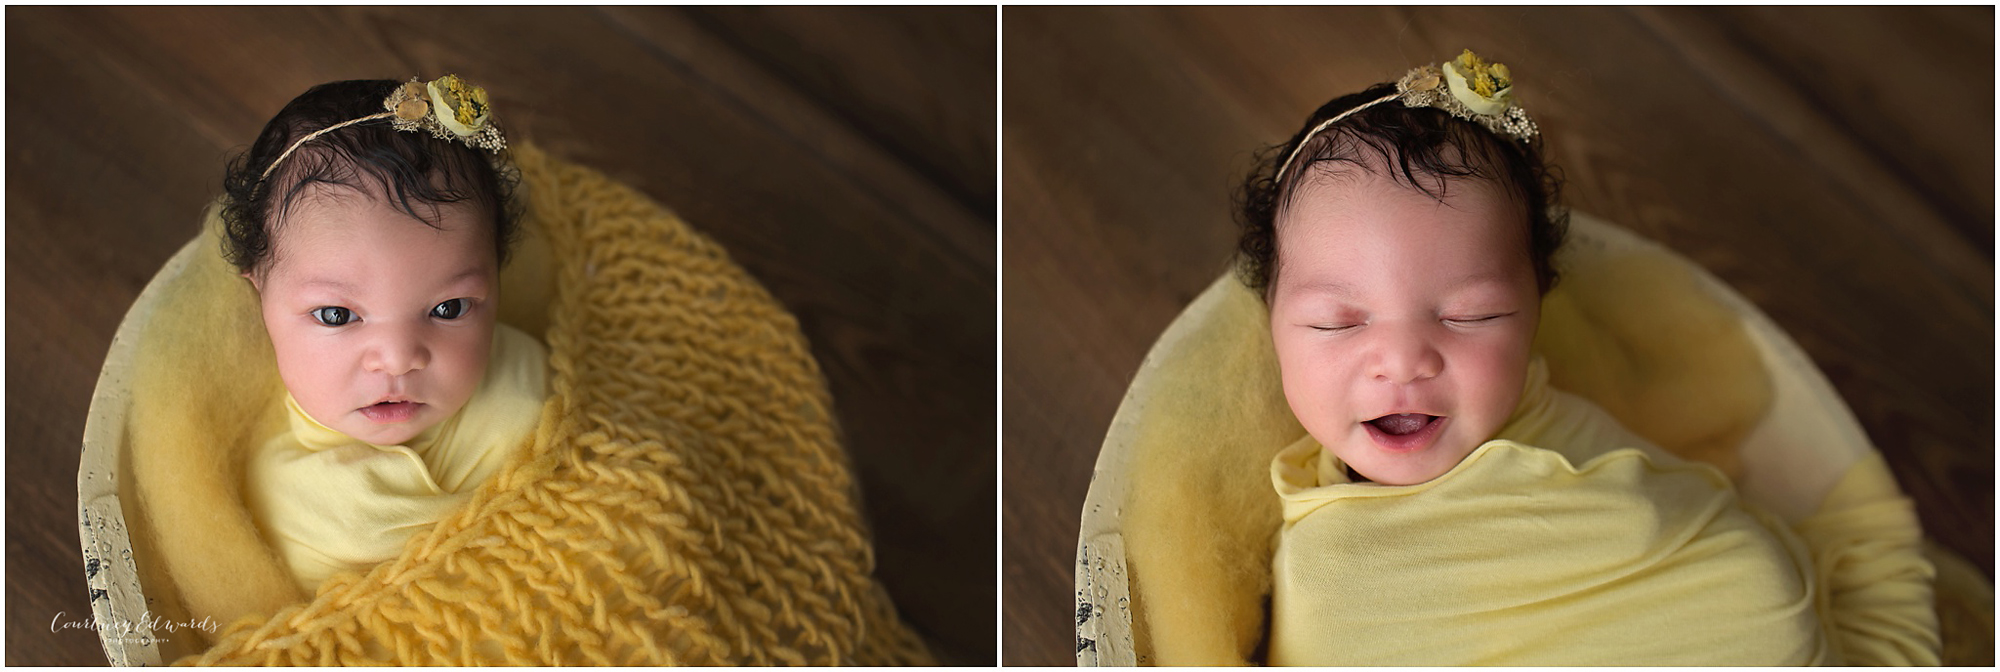 Newborn girl in bow with yellow headband